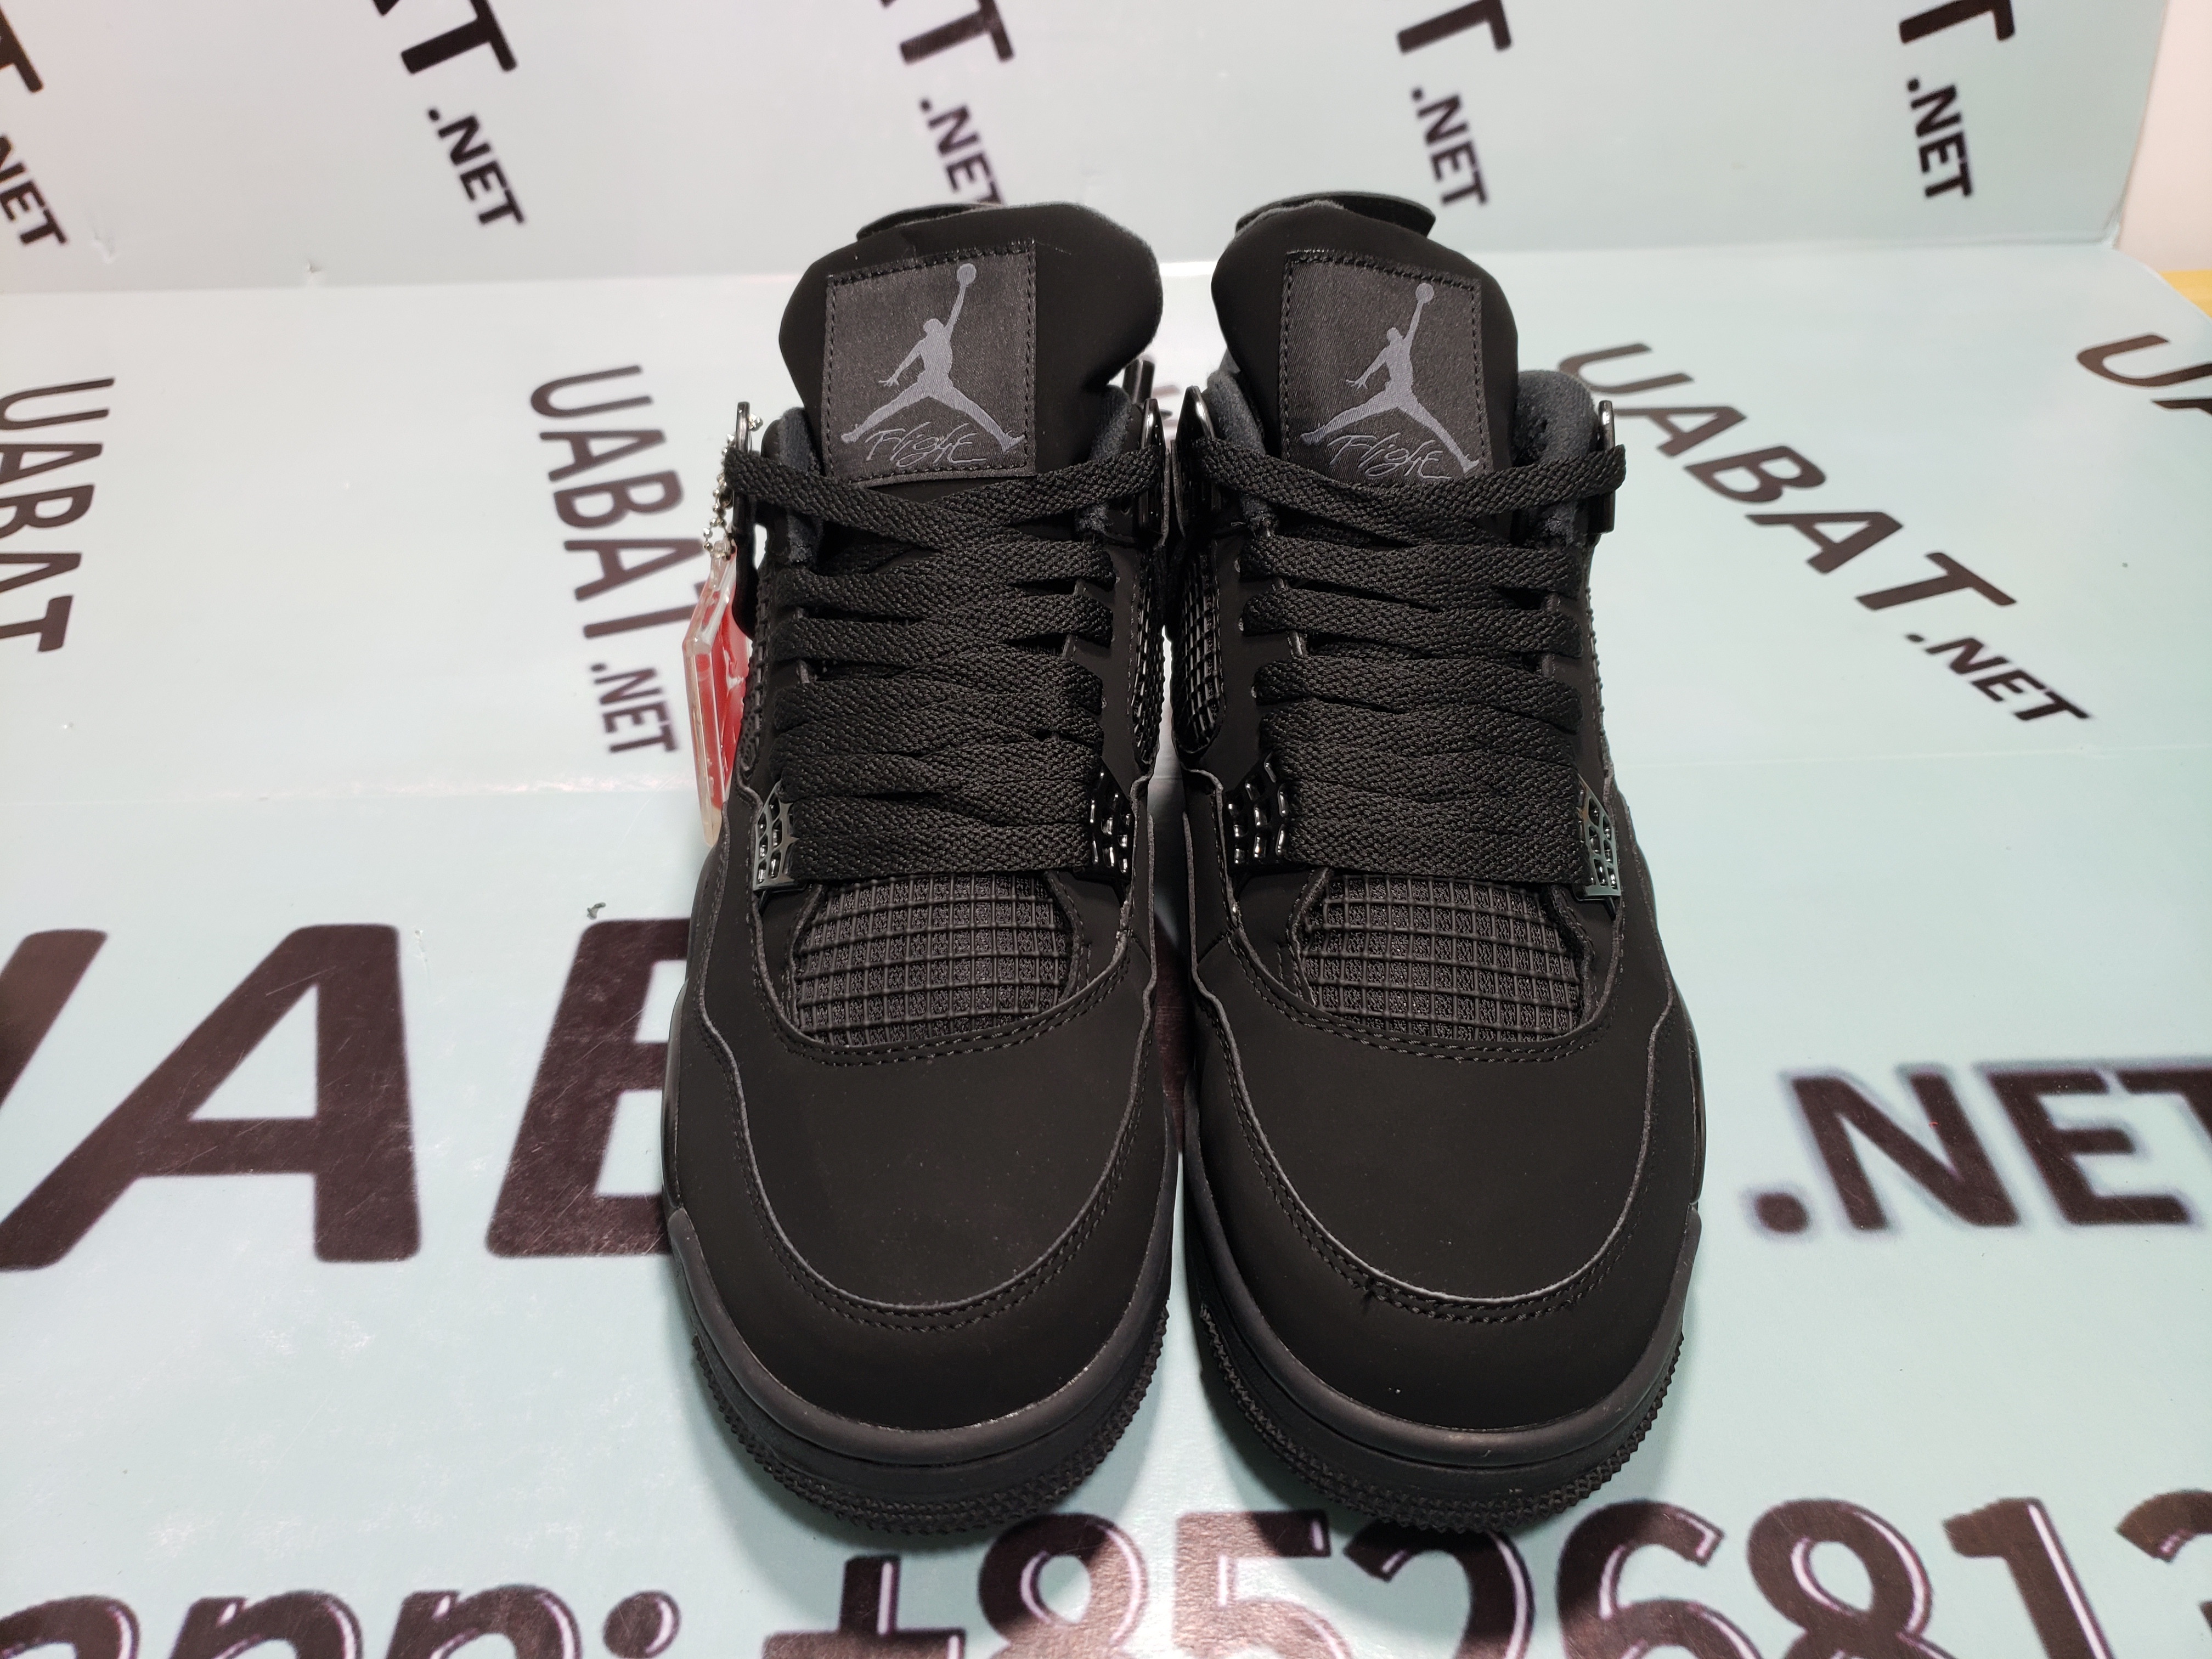 Size 10.5 - Jordan 4 Retro Black Cat 2020 NO BOX MSG Before